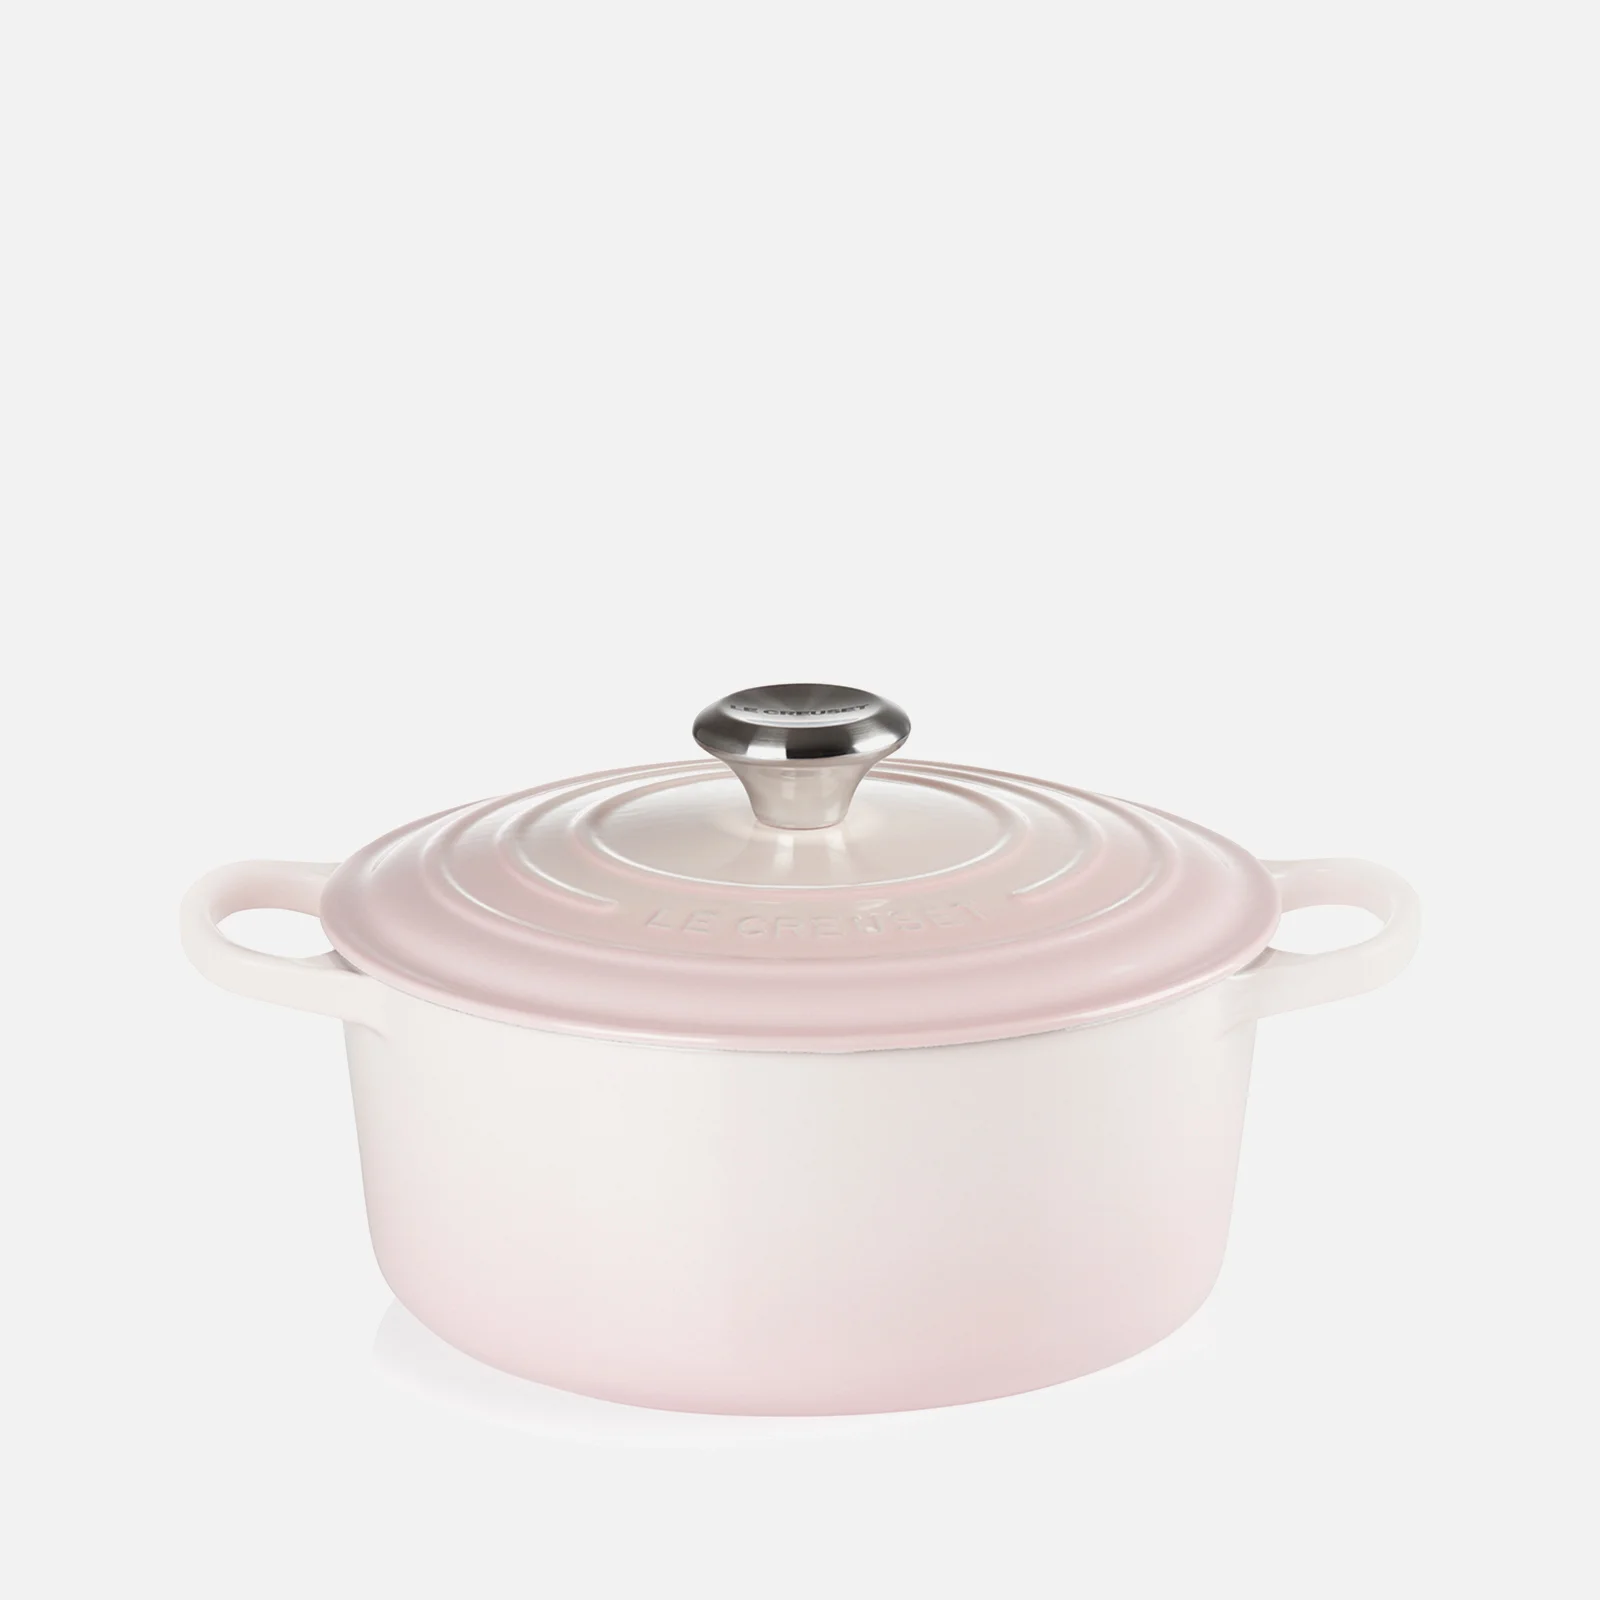 Le Creuset Signature Cast Iron Round Casserole Dish - 24cm - Shell Pink Image 1